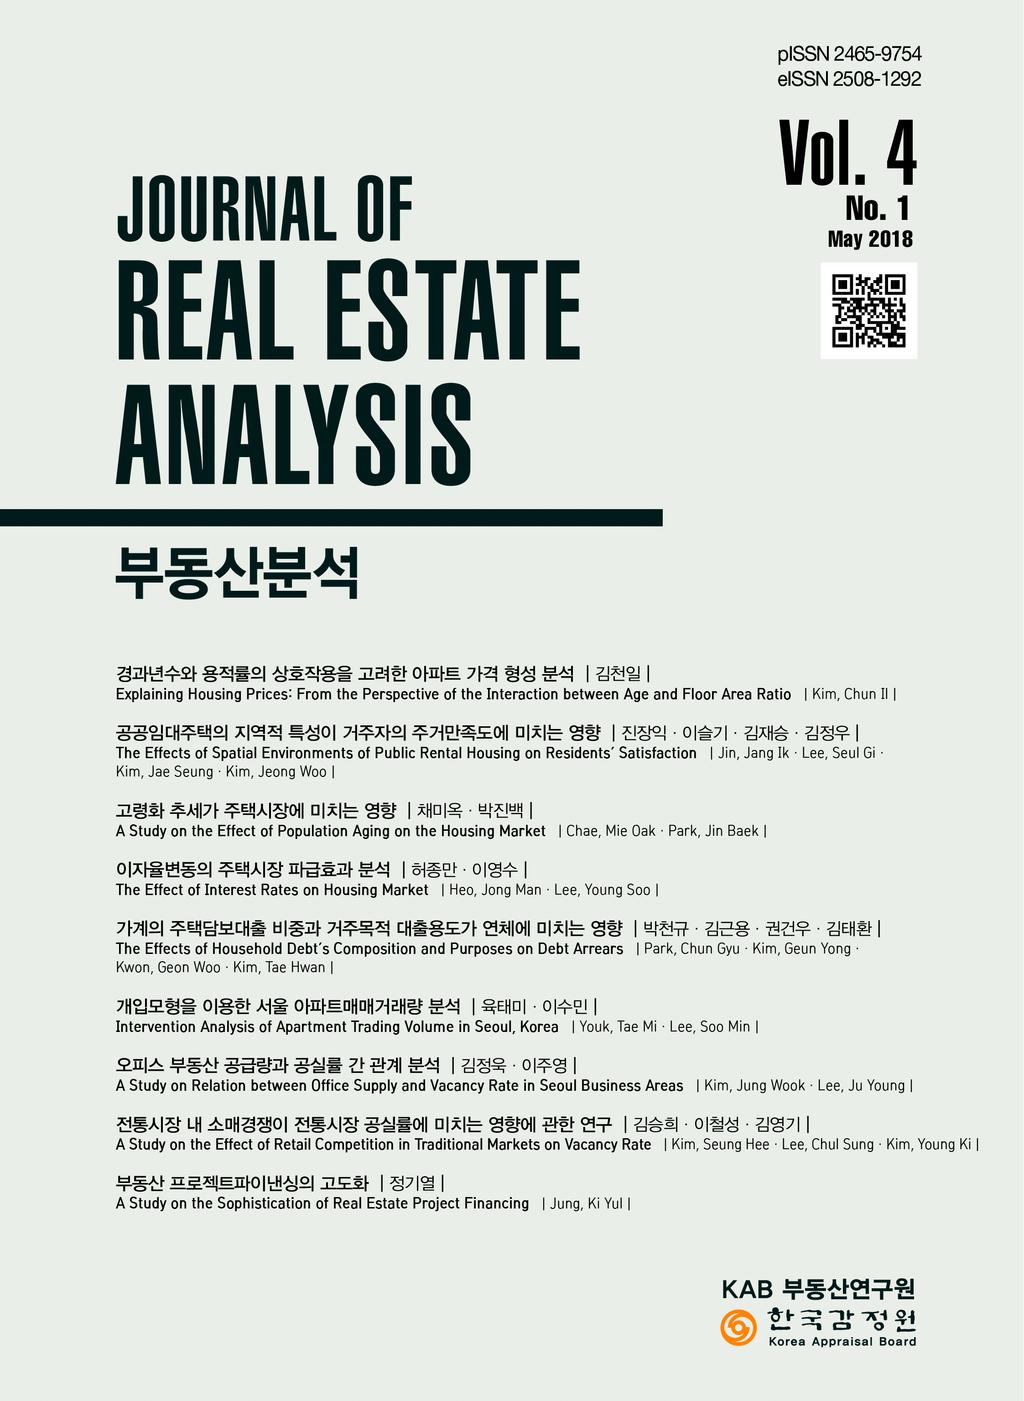 pissn : 2465-9754 eissn : 2508-1292 https://doi.org/10.30902/jrea.2018.4.1.33 Journal of Real Estate Analysis http://www.kabjrea.org May 2018, Vol.4, No.1, pp.